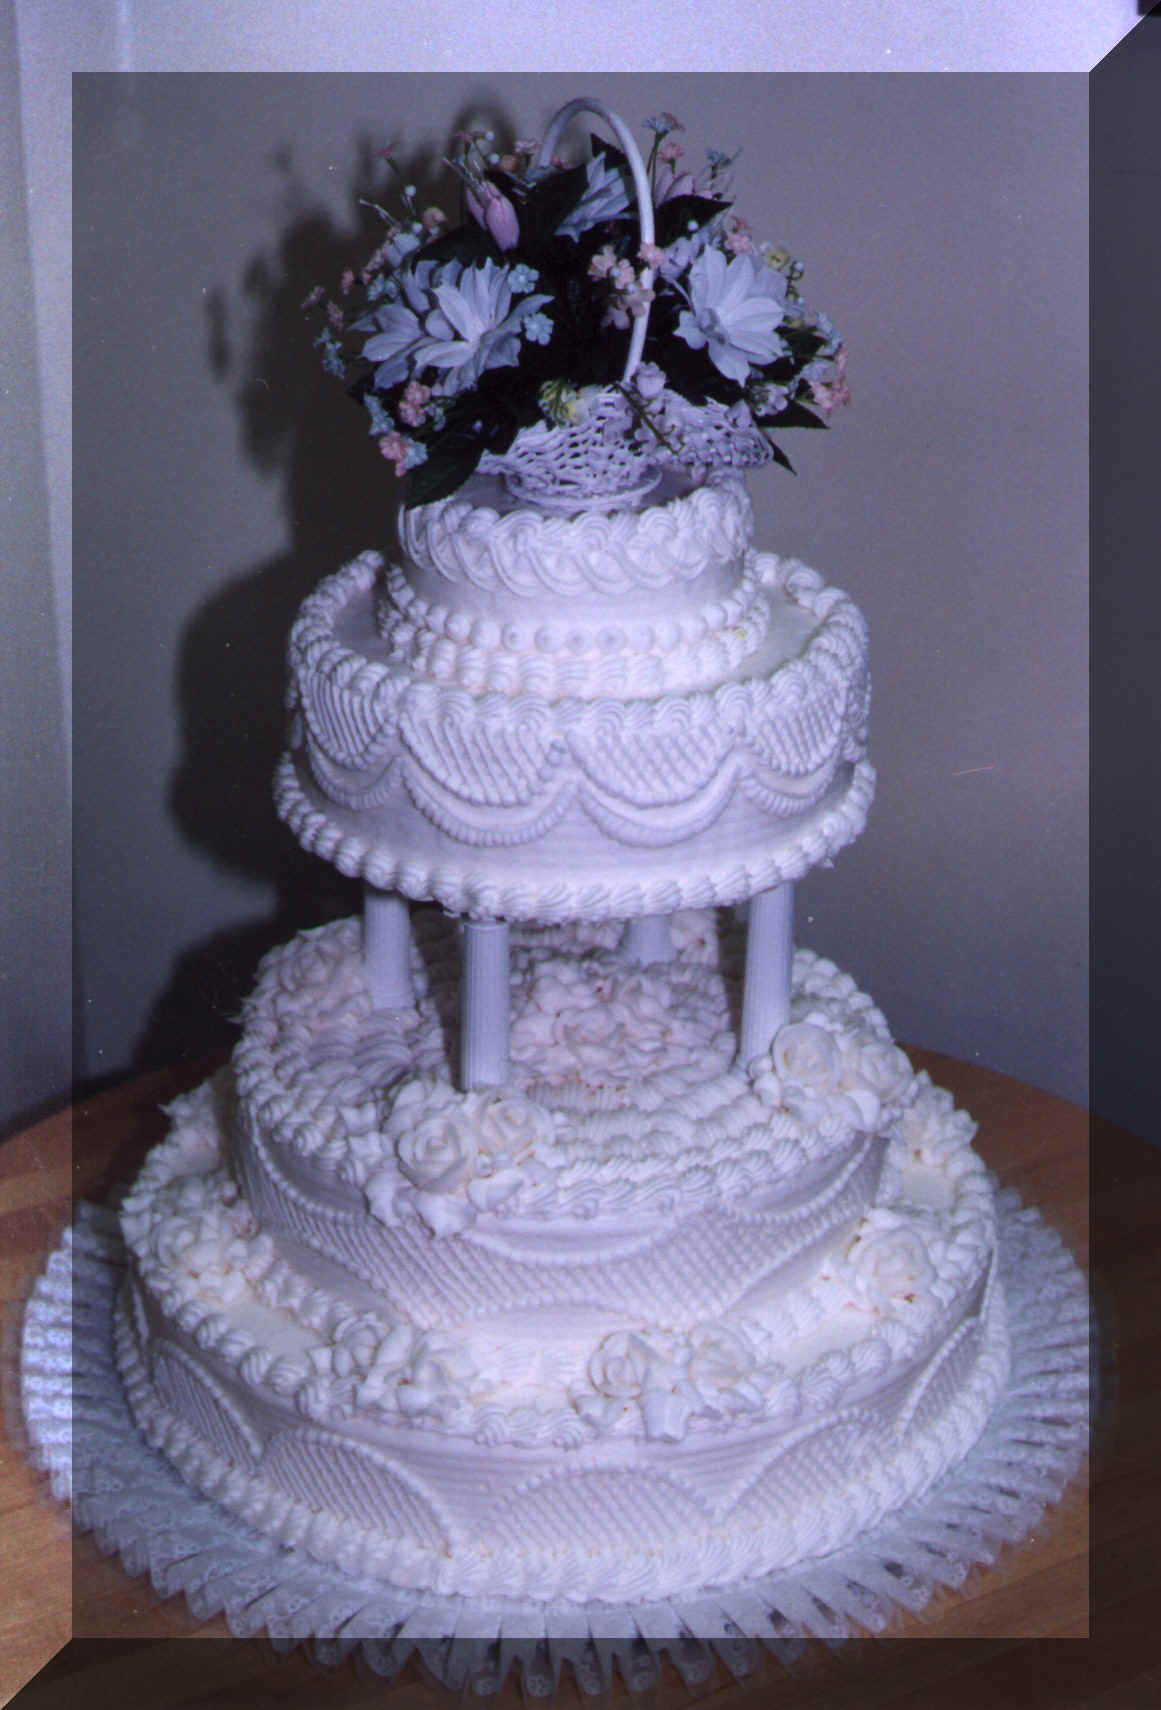 Walmart Wedding Cakes Images
 Walmart Wedding Cake Prices